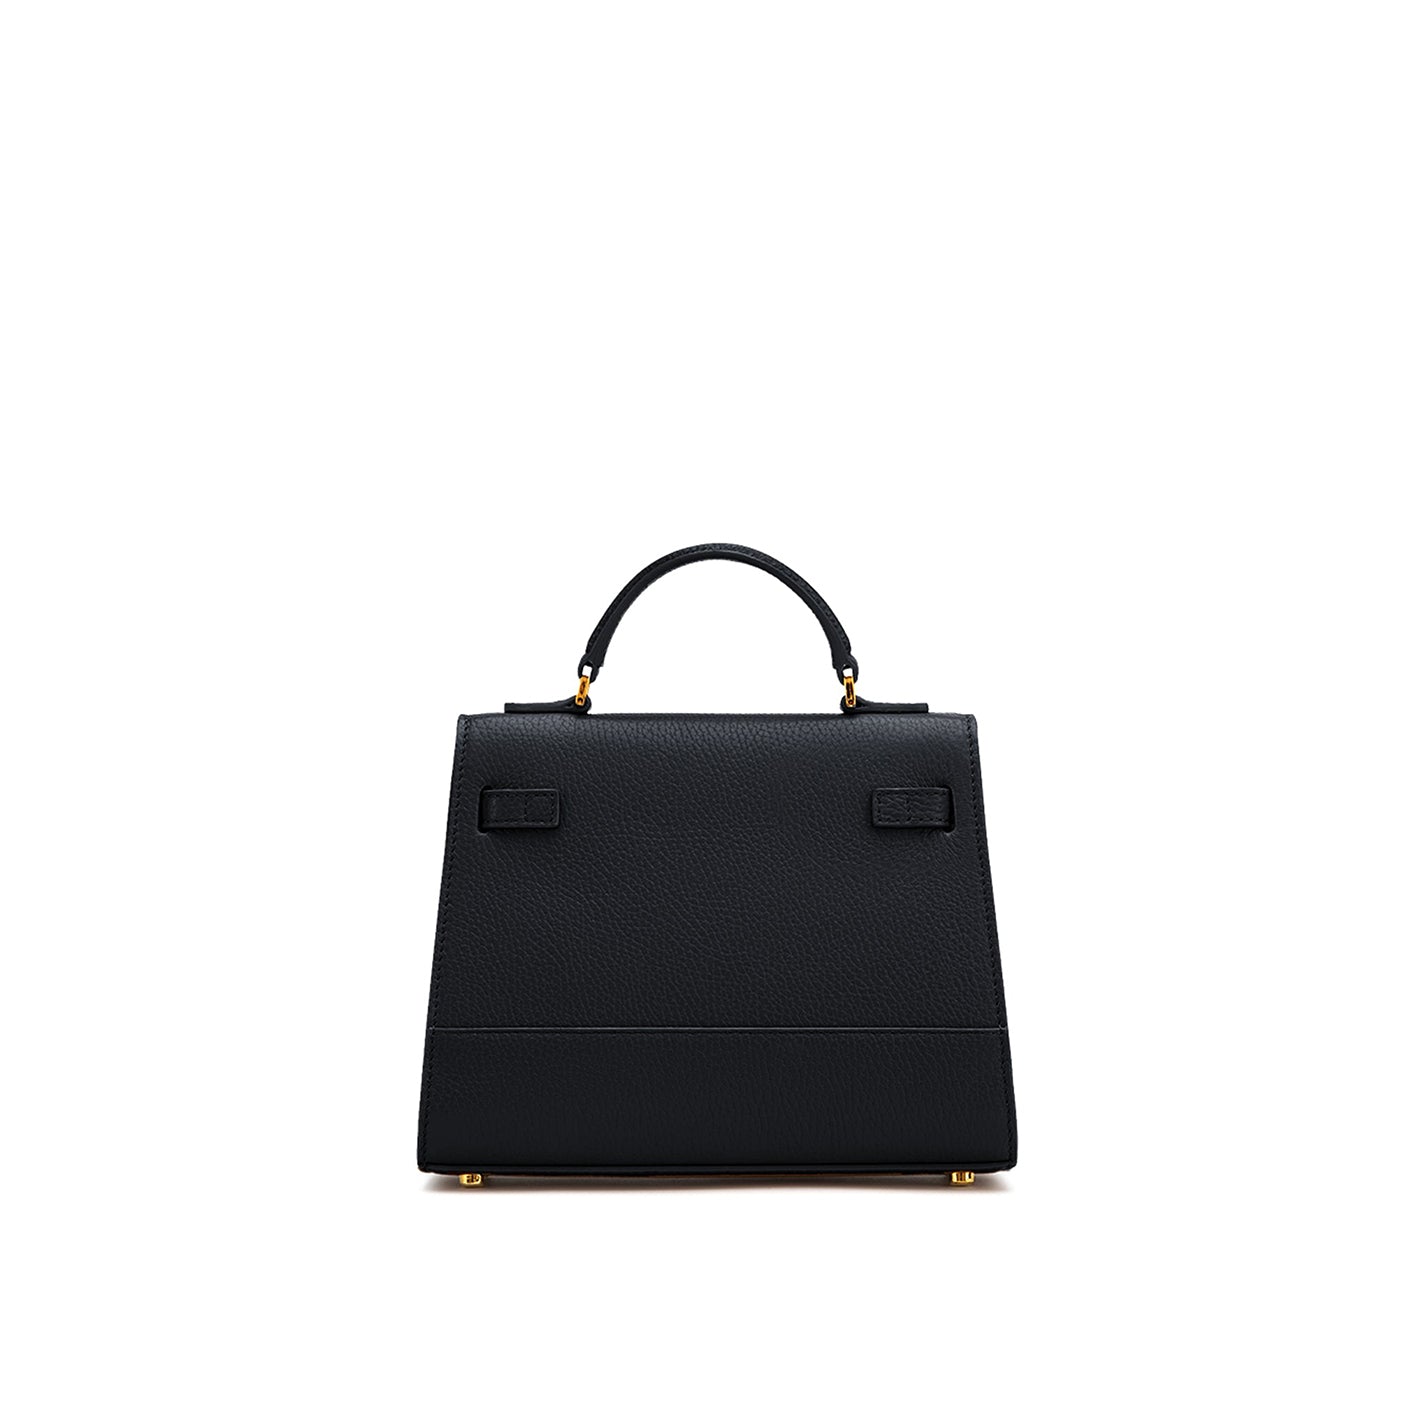 kim-stampatto-9-black-leather-bag-back